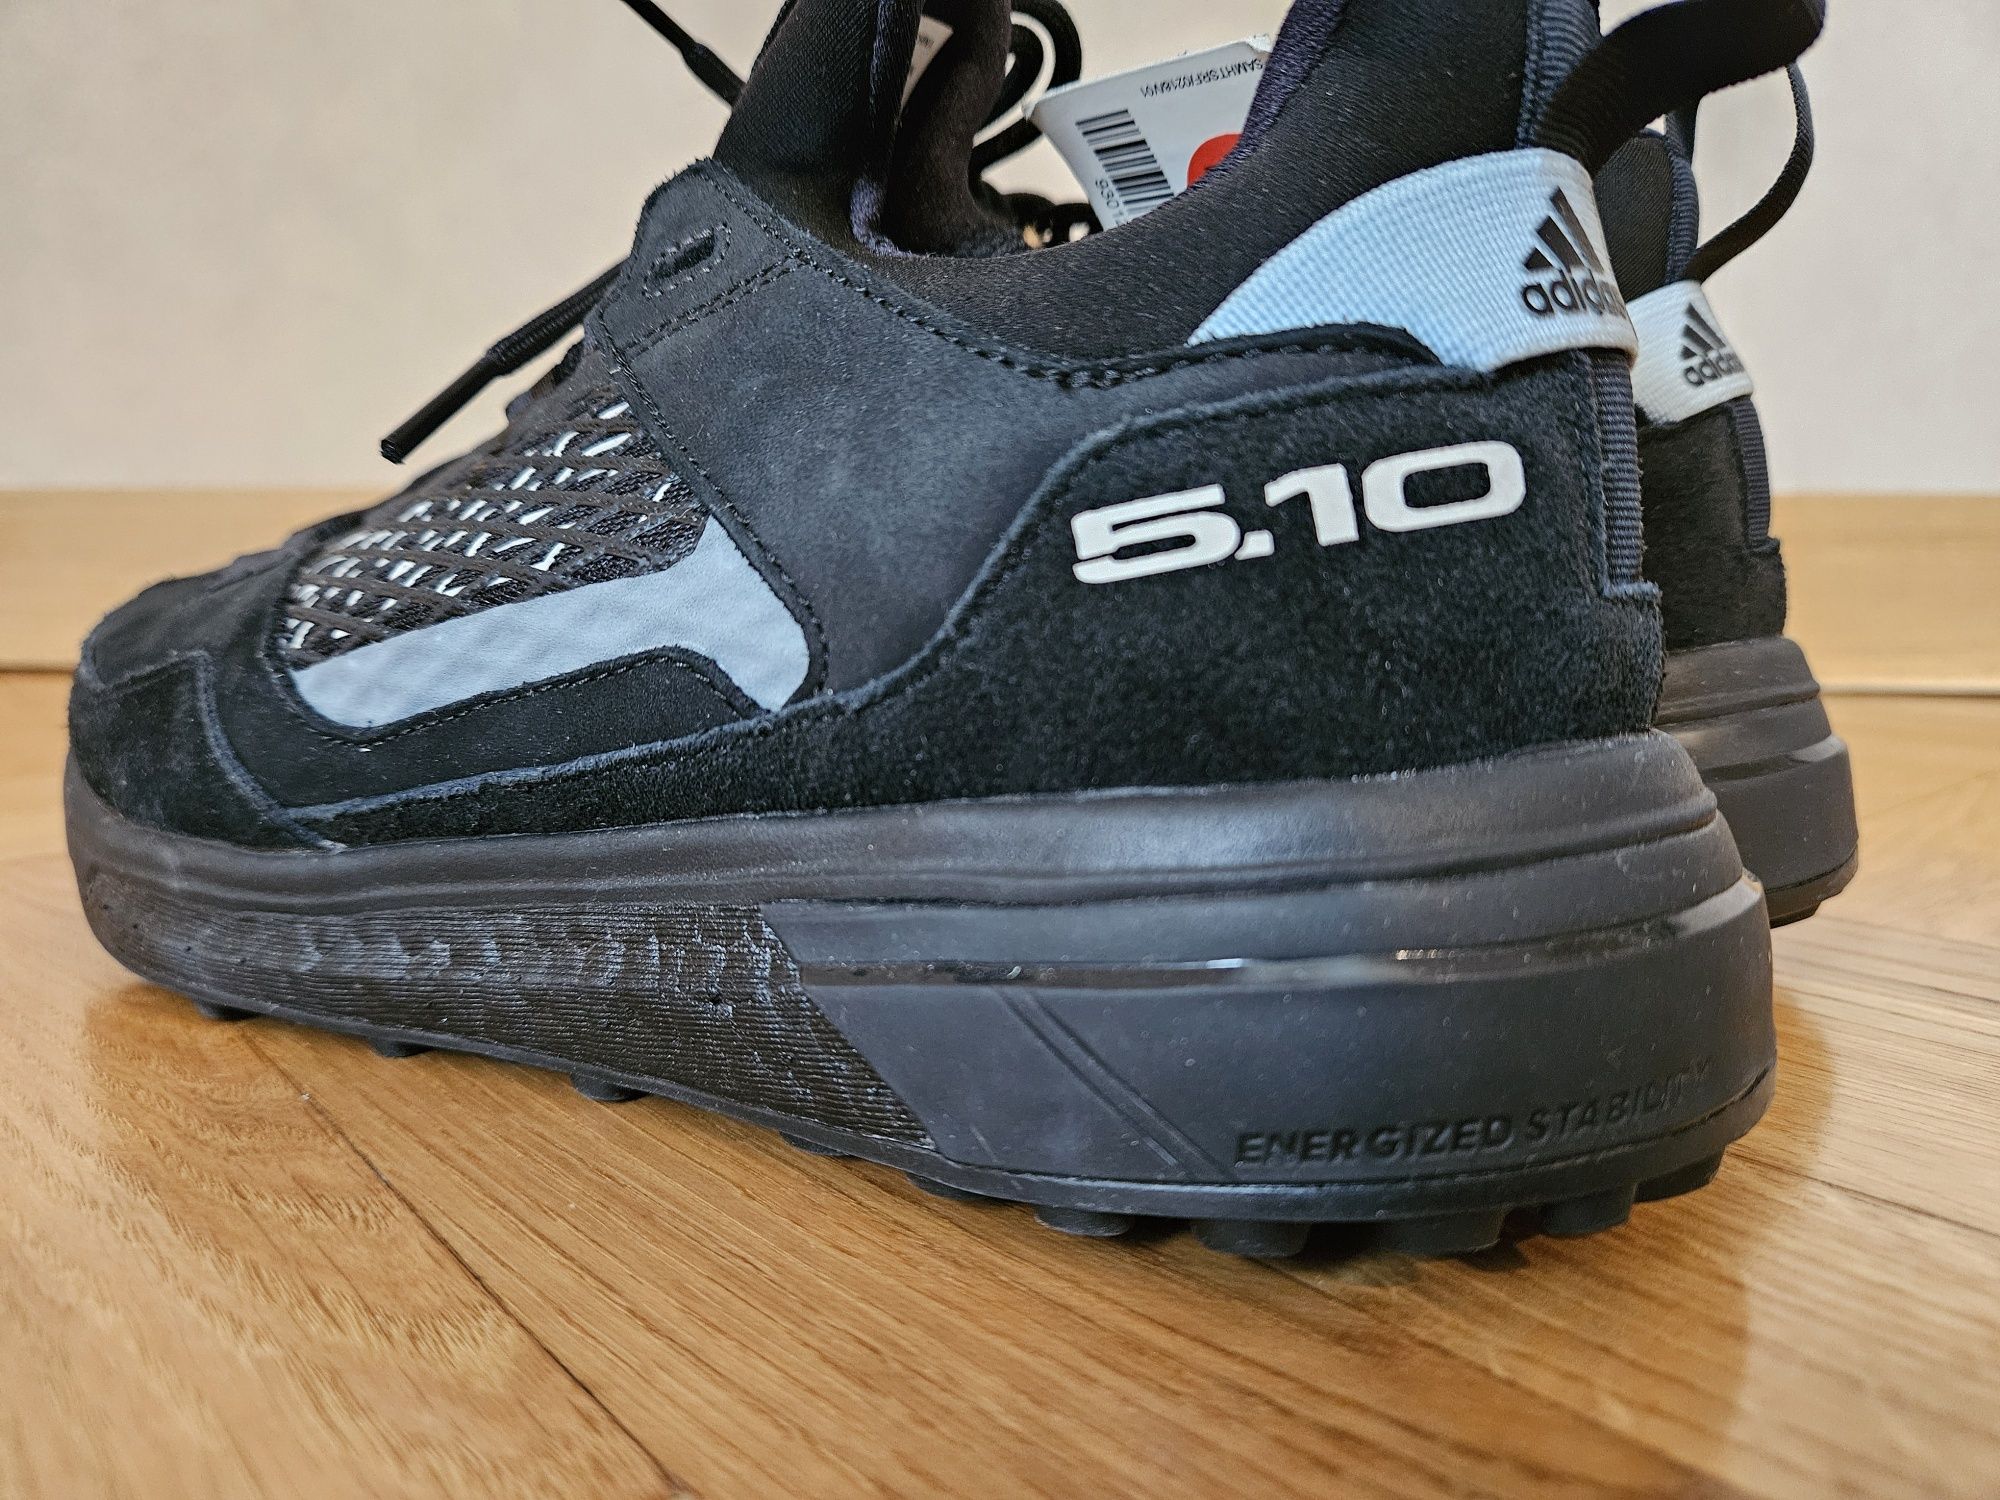 Adidas Five ten 5.10 Five Tennie DLX 38 2/3 buty trekkingowe damskie